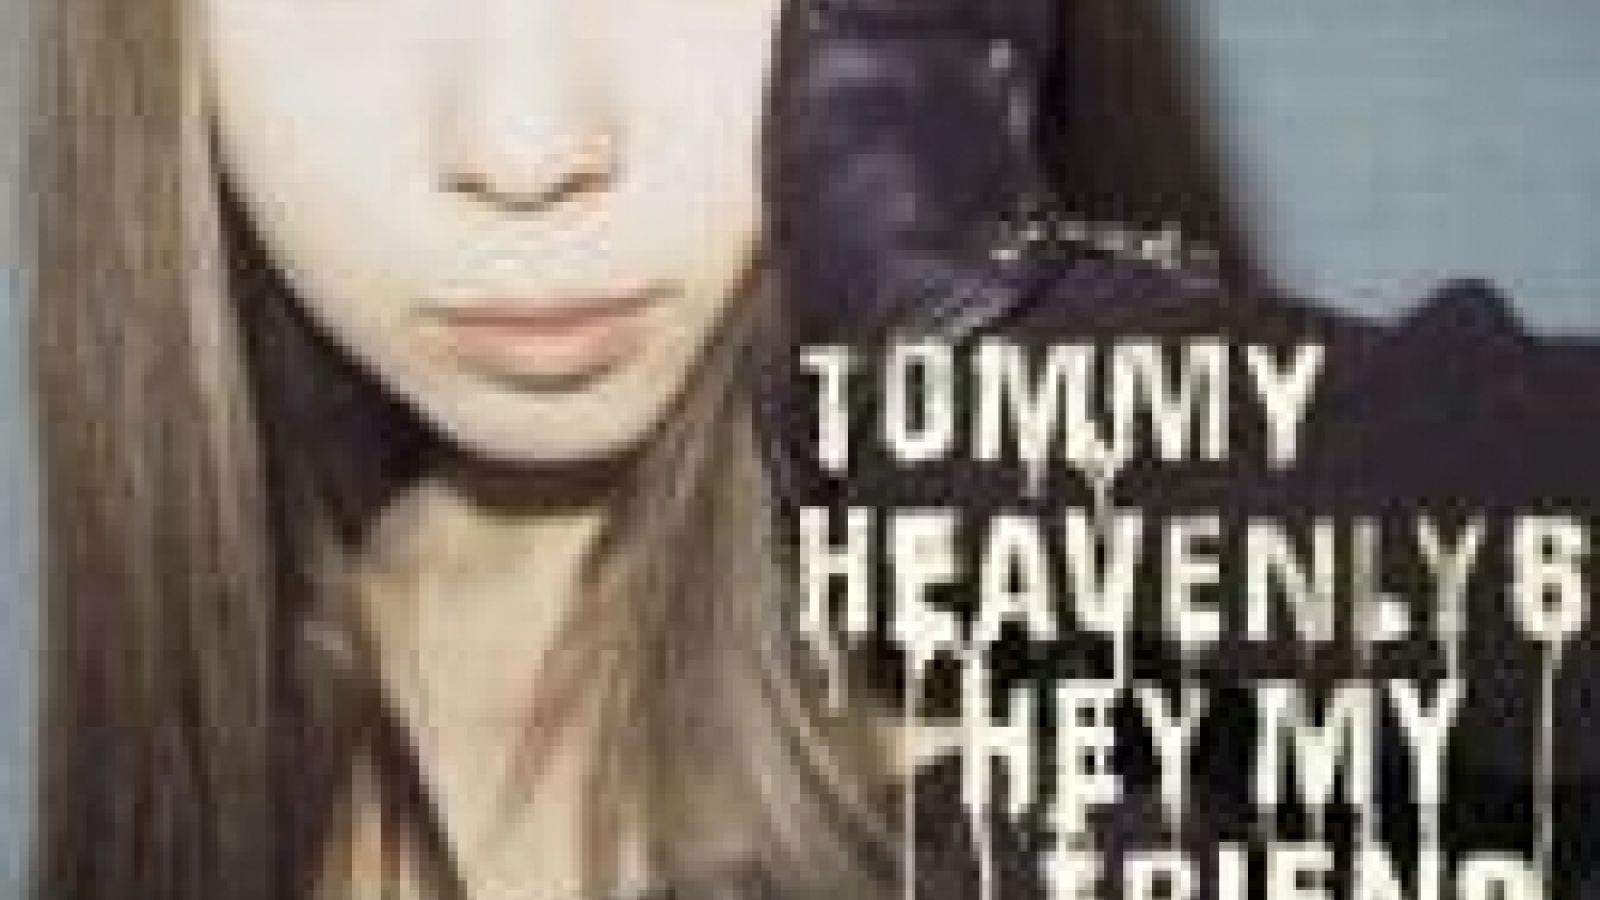 Tommy heavenly6 - Hey my friend © 